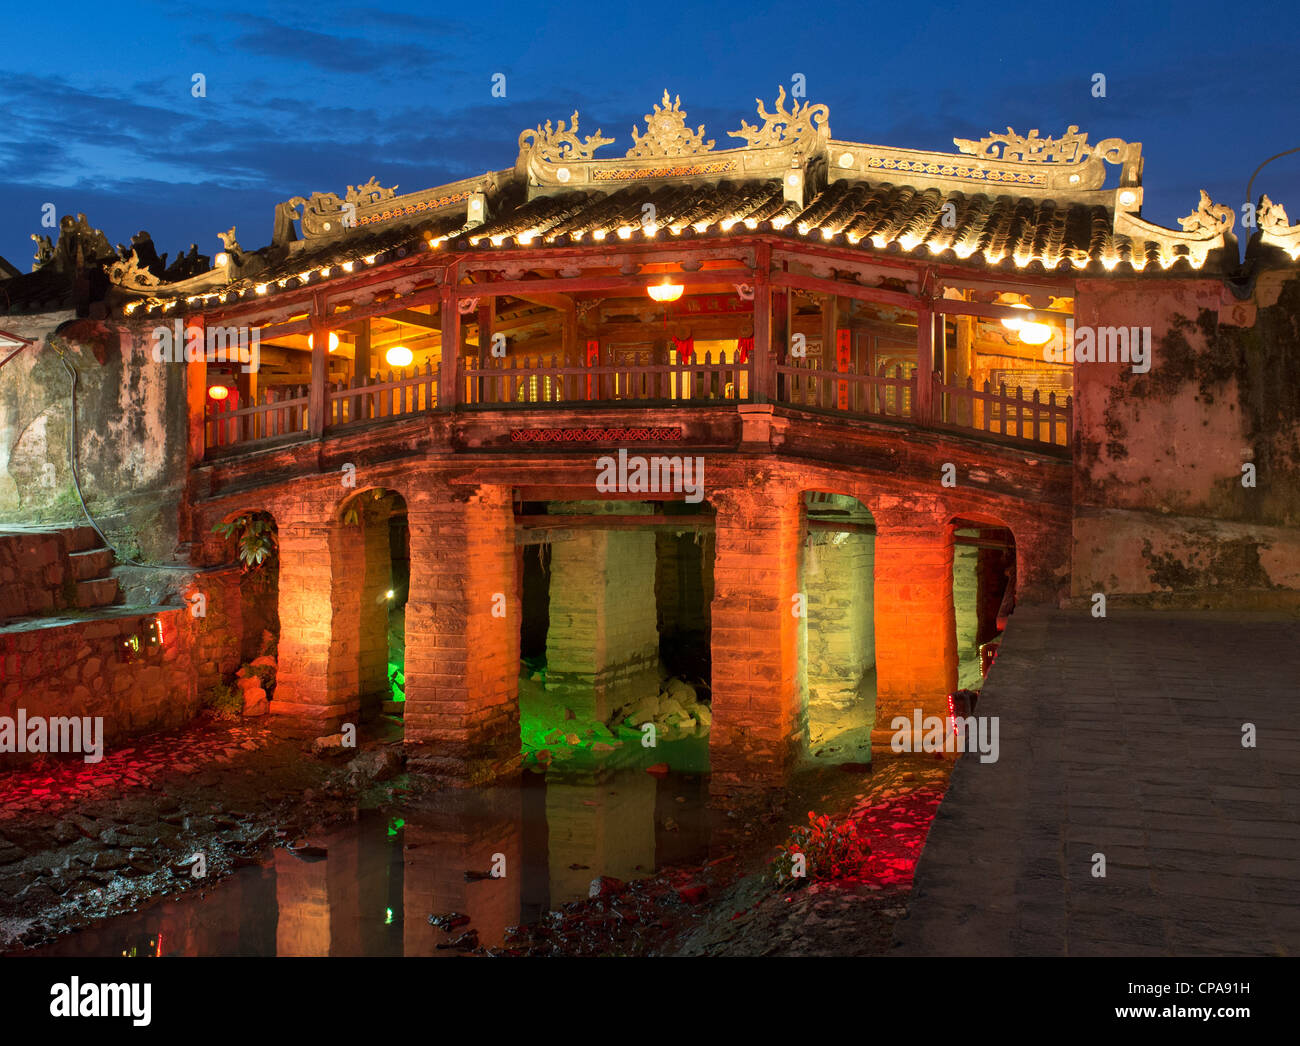 Illuminated night view of historic Japanese covered bridge in UNESCO heritage town of Hoian in Vietnam Stock Photo